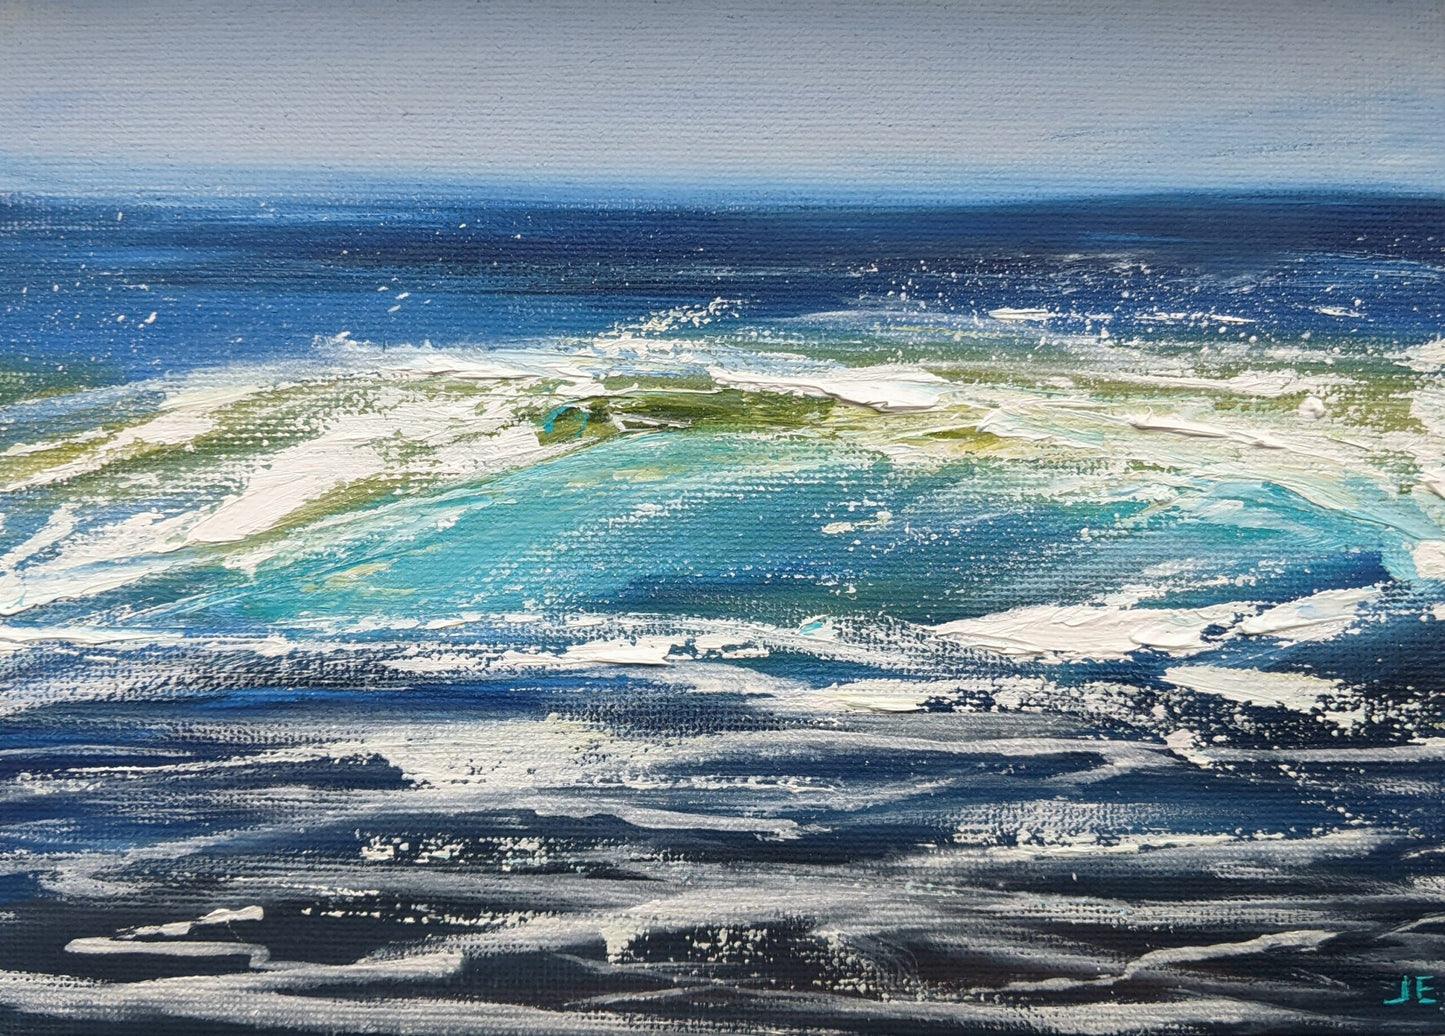 Miniature Wave Seascape #6 oil painting on canvas board, by Jo Earl